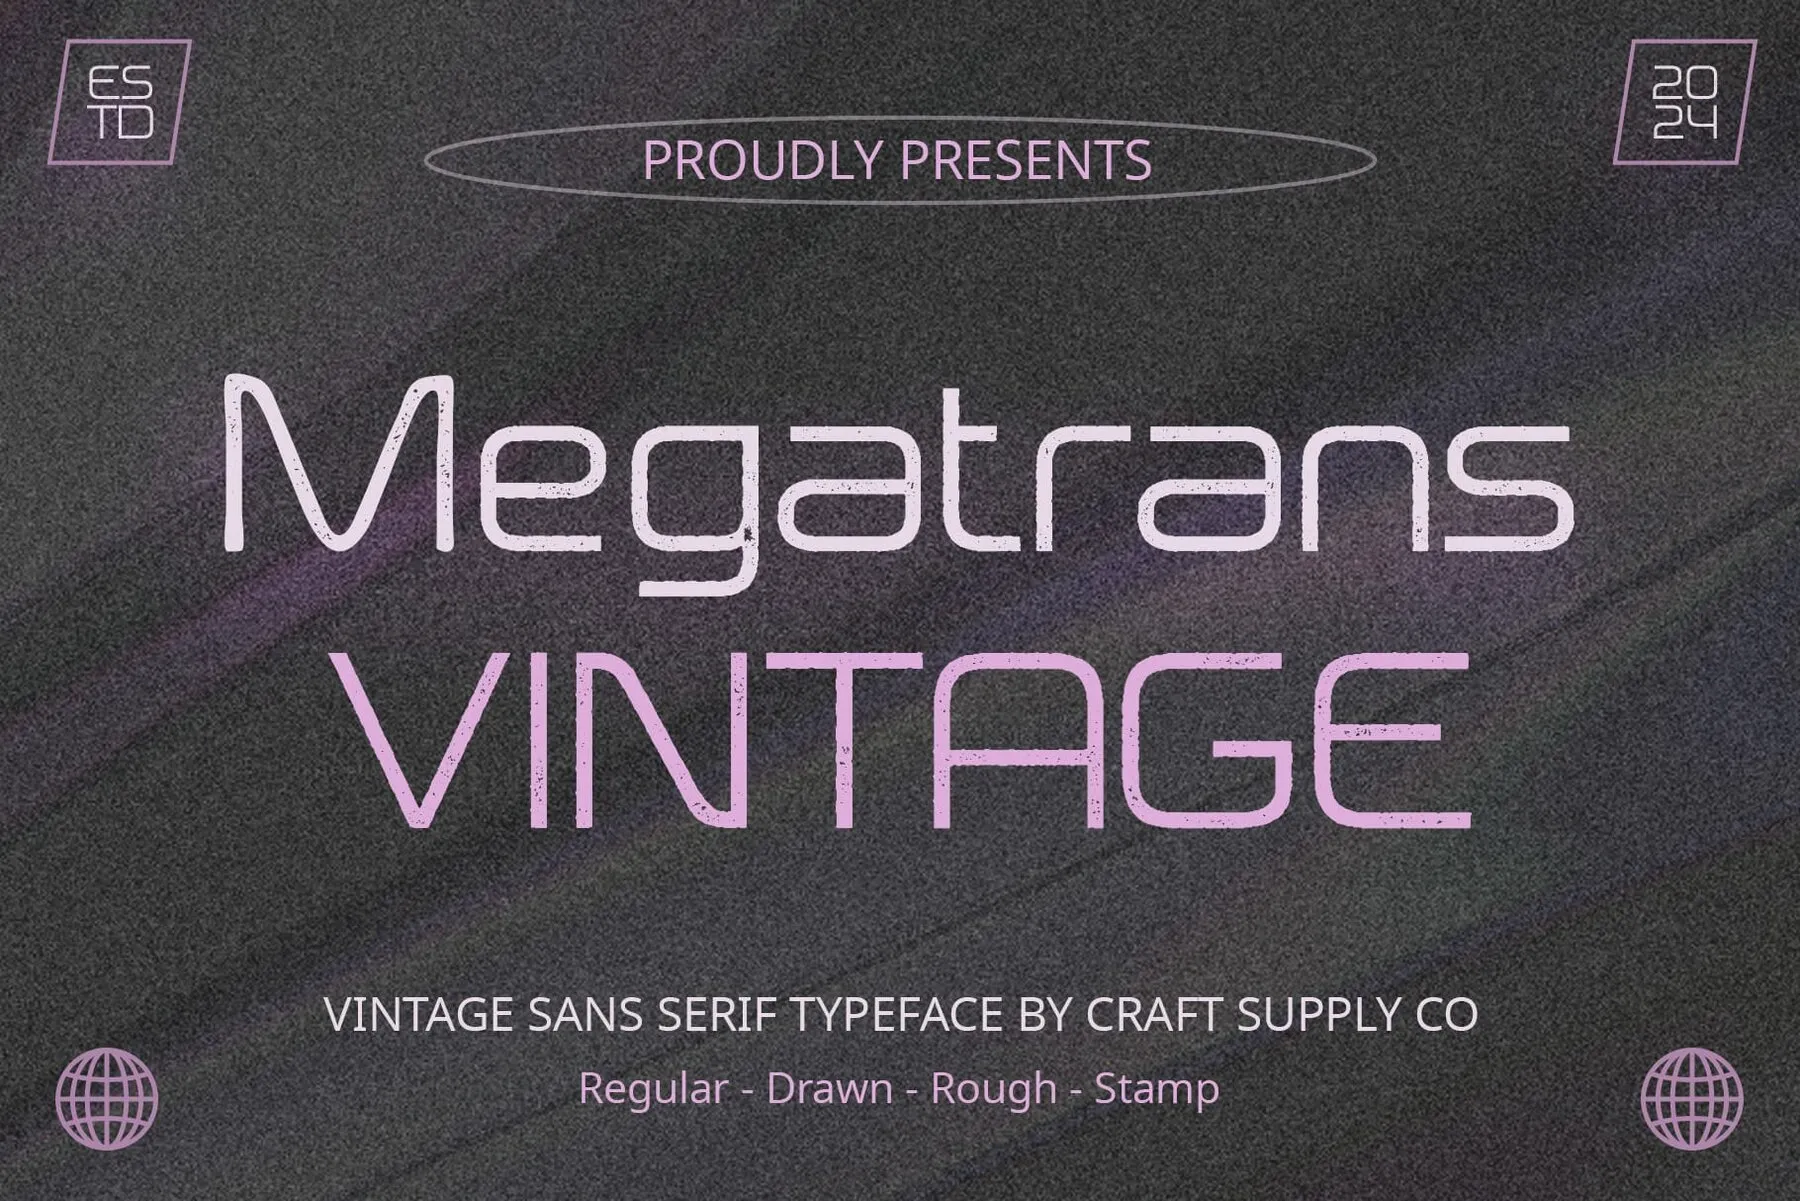 Megatrans Vintage